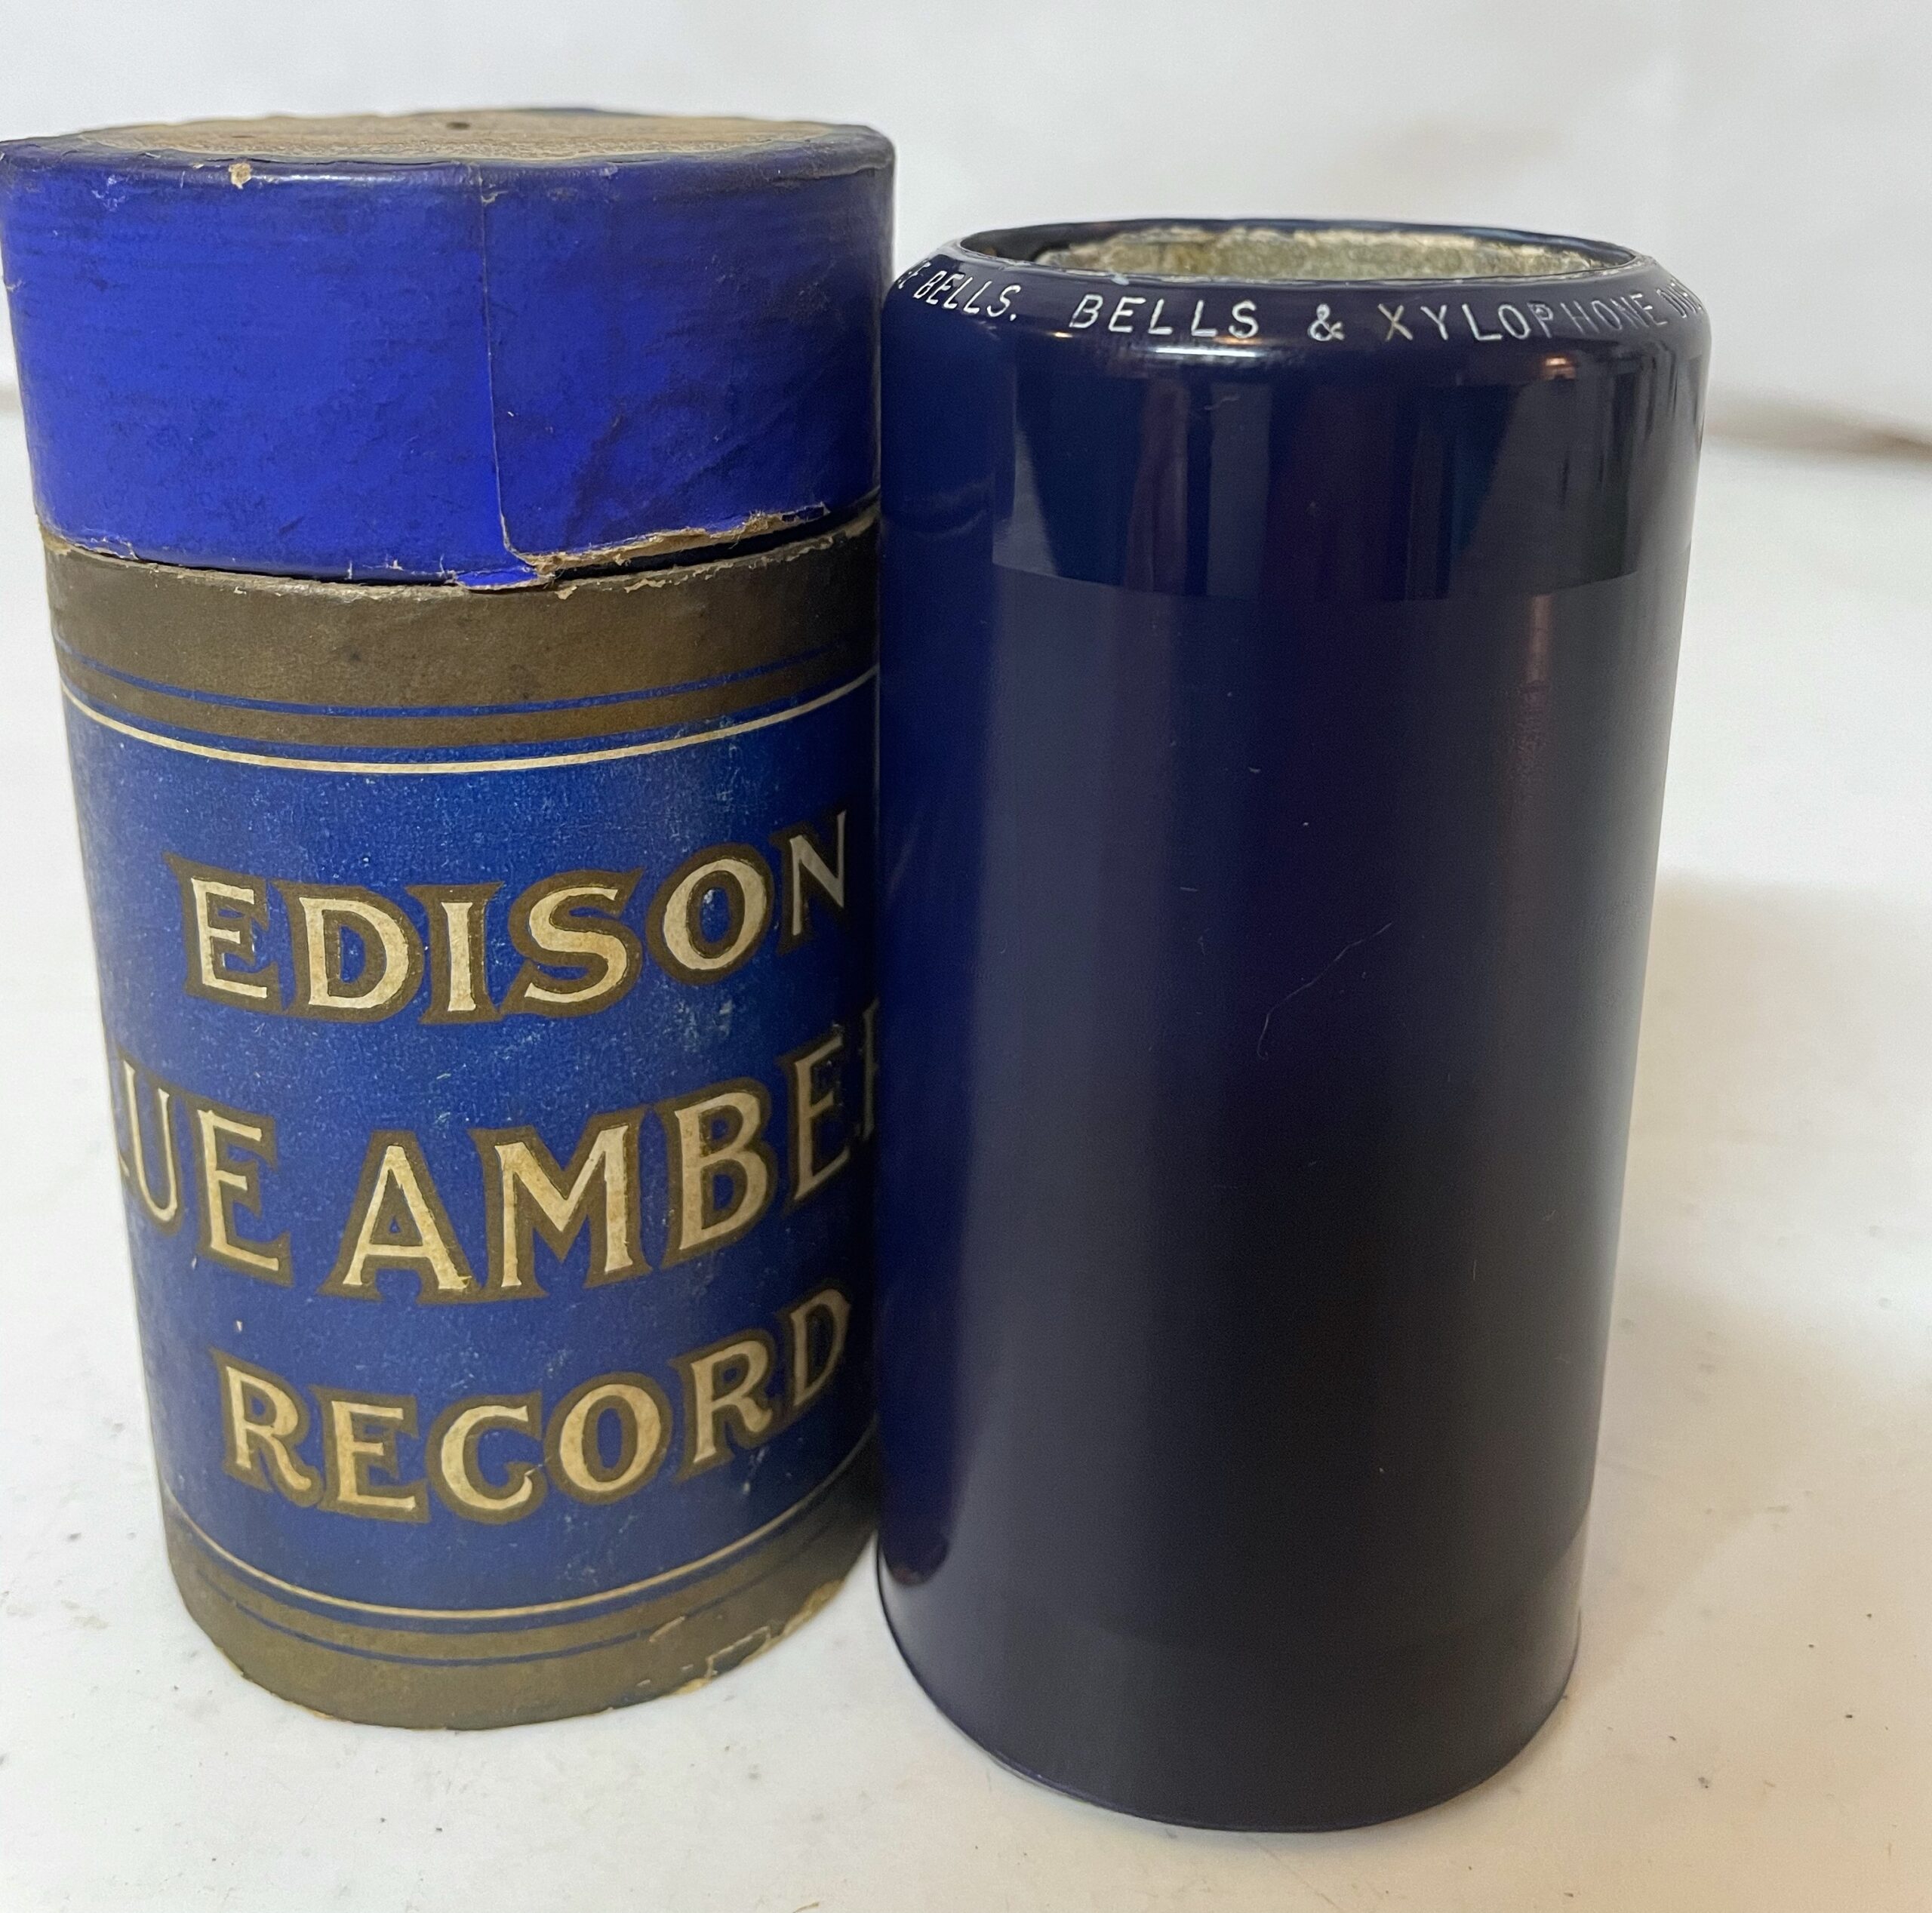 Edison 4 min. Cylinder… “Lincoln’s Speech at Gettysburg”